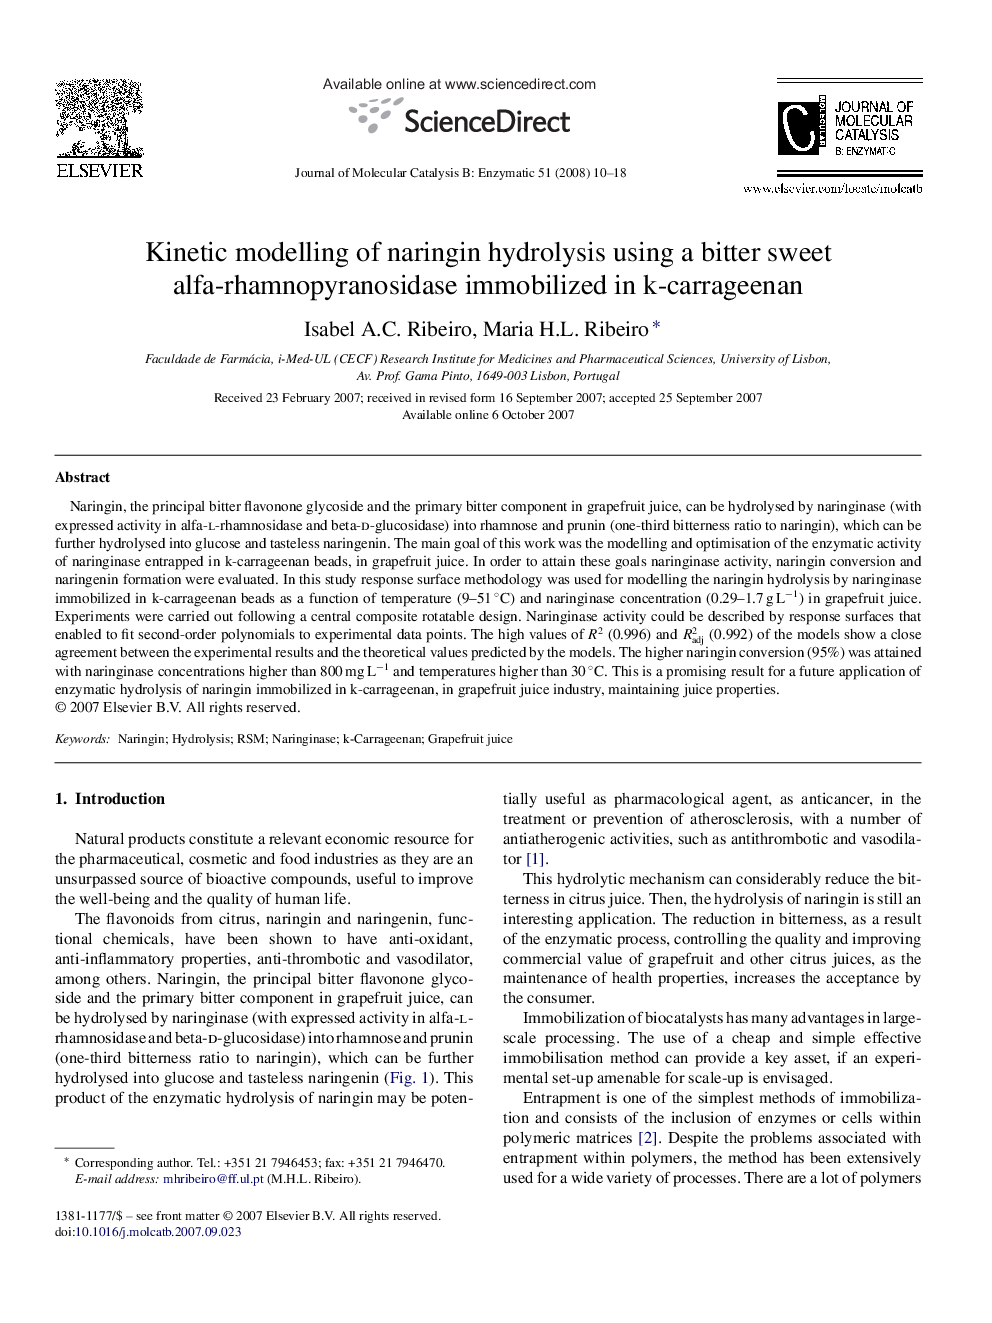 Kinetic modelling of naringin hydrolysis using a bitter sweet alfa-rhamnopyranosidase immobilized in k-carrageenan